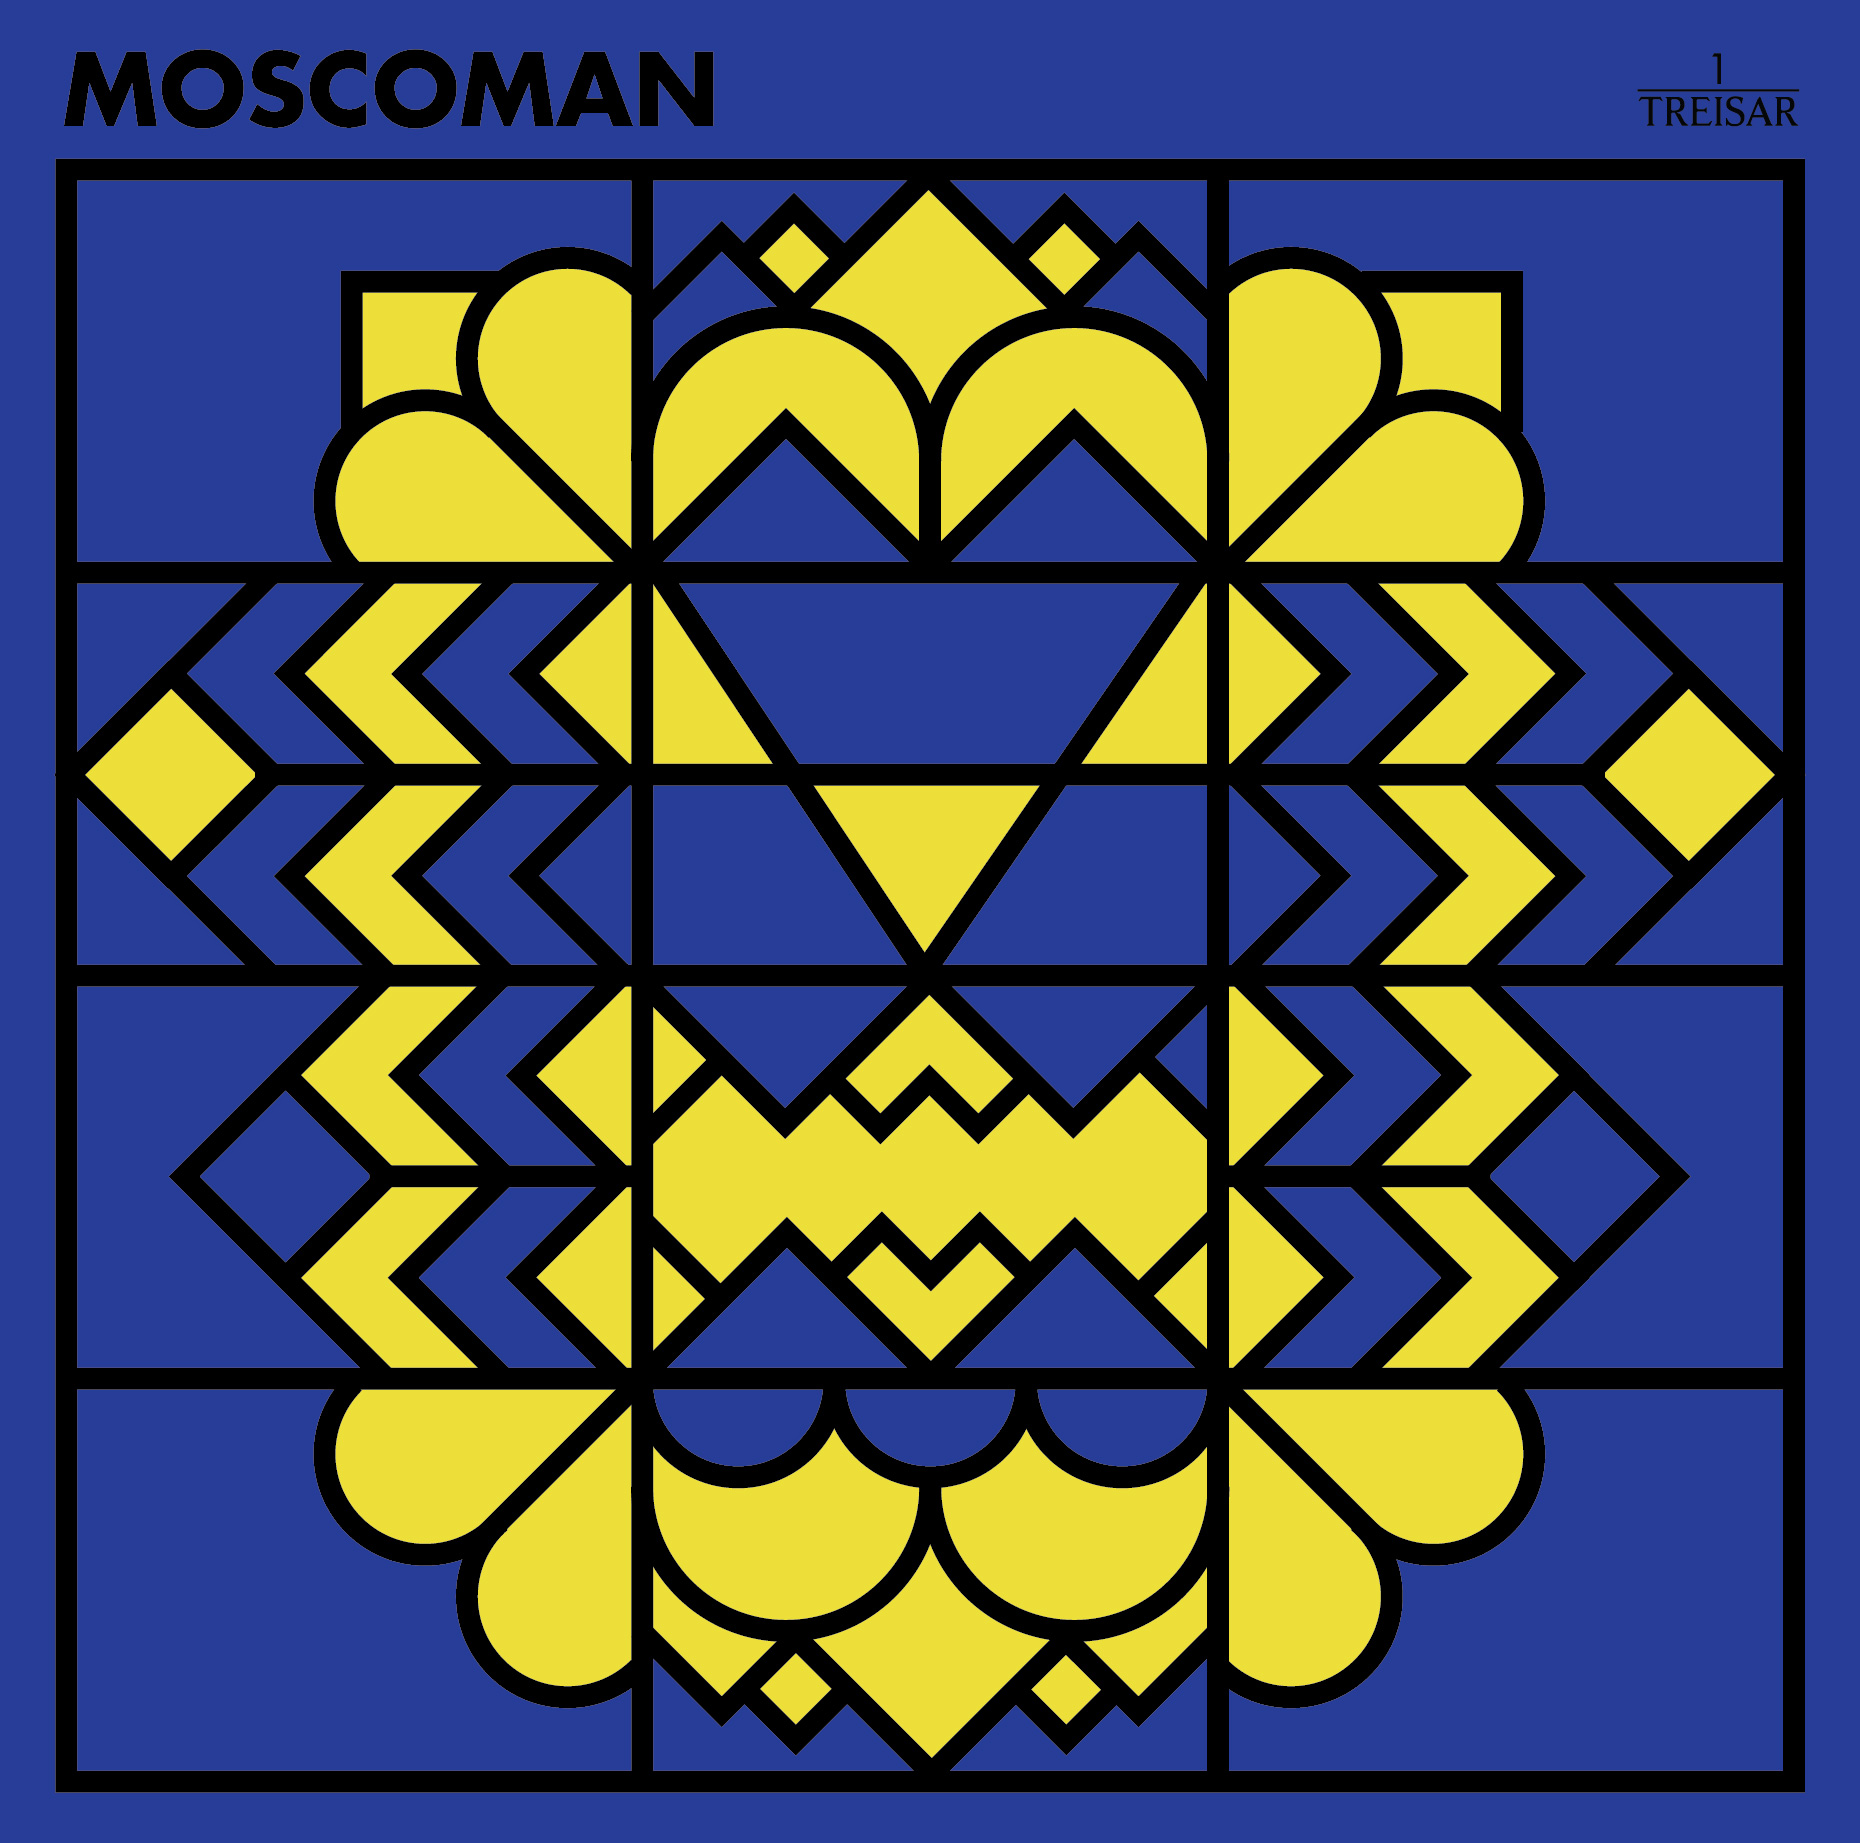 moscoman